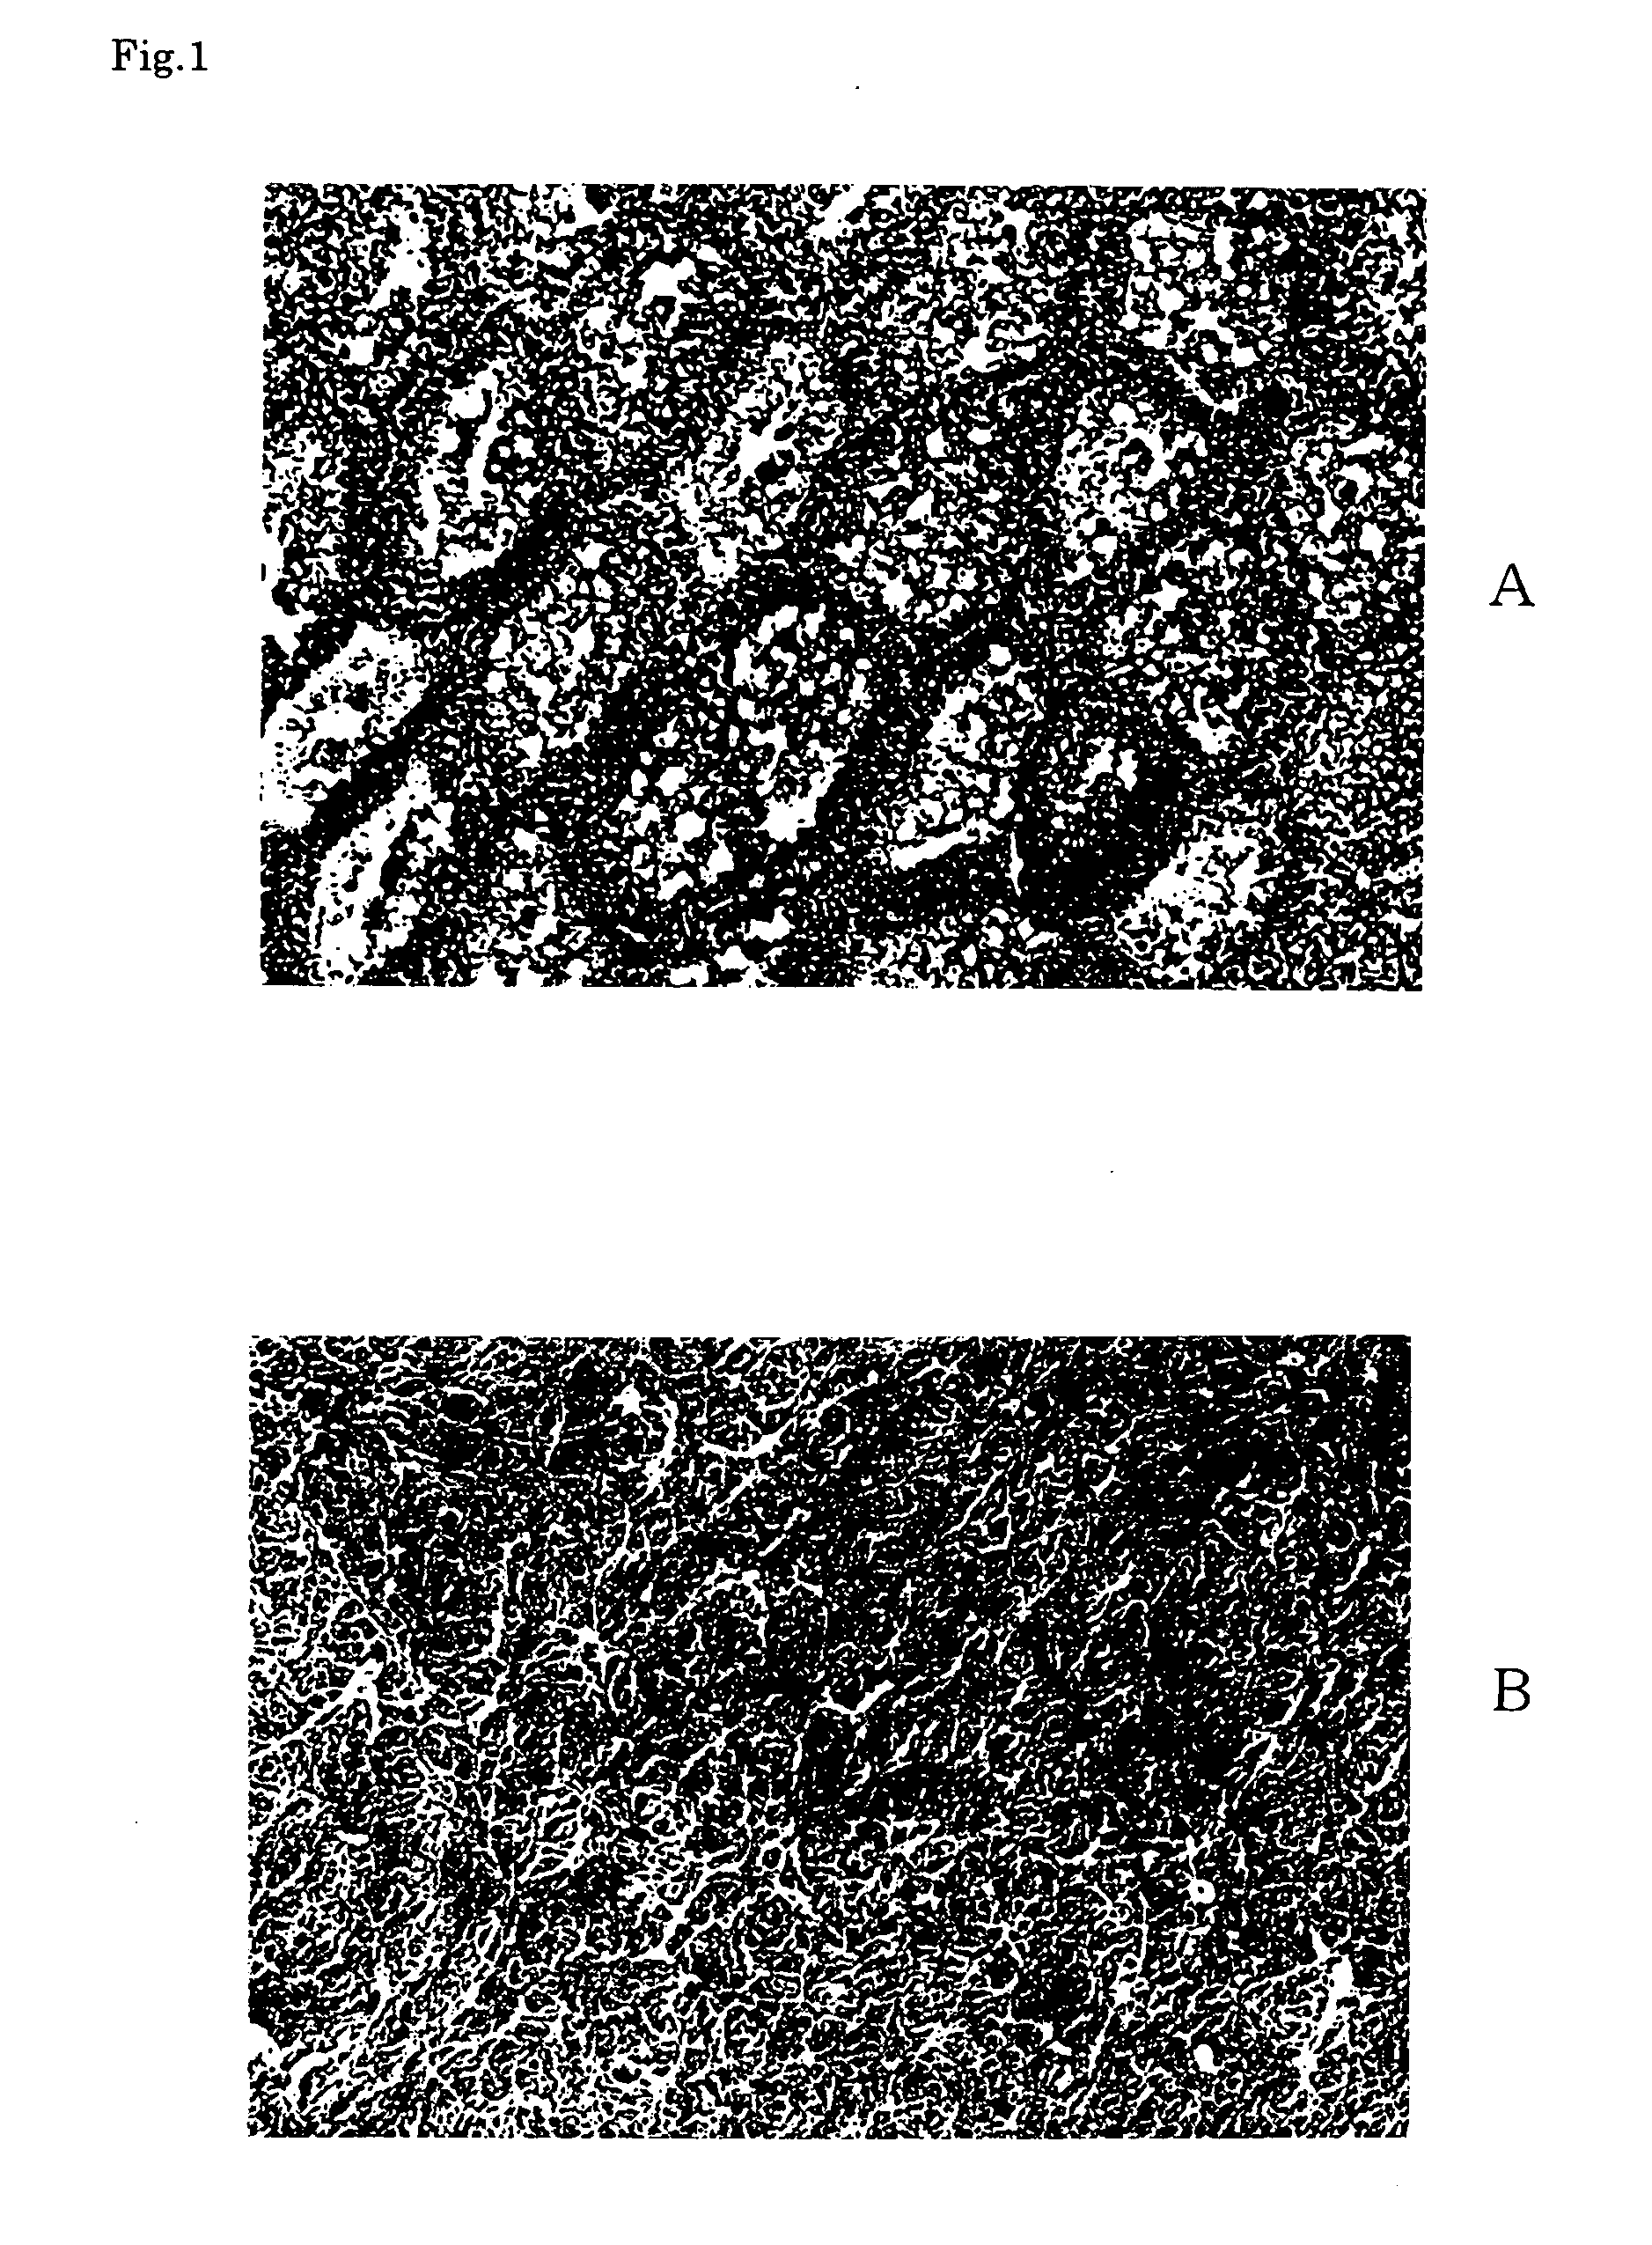 Ectocornea-like sheet and method of constructing the same